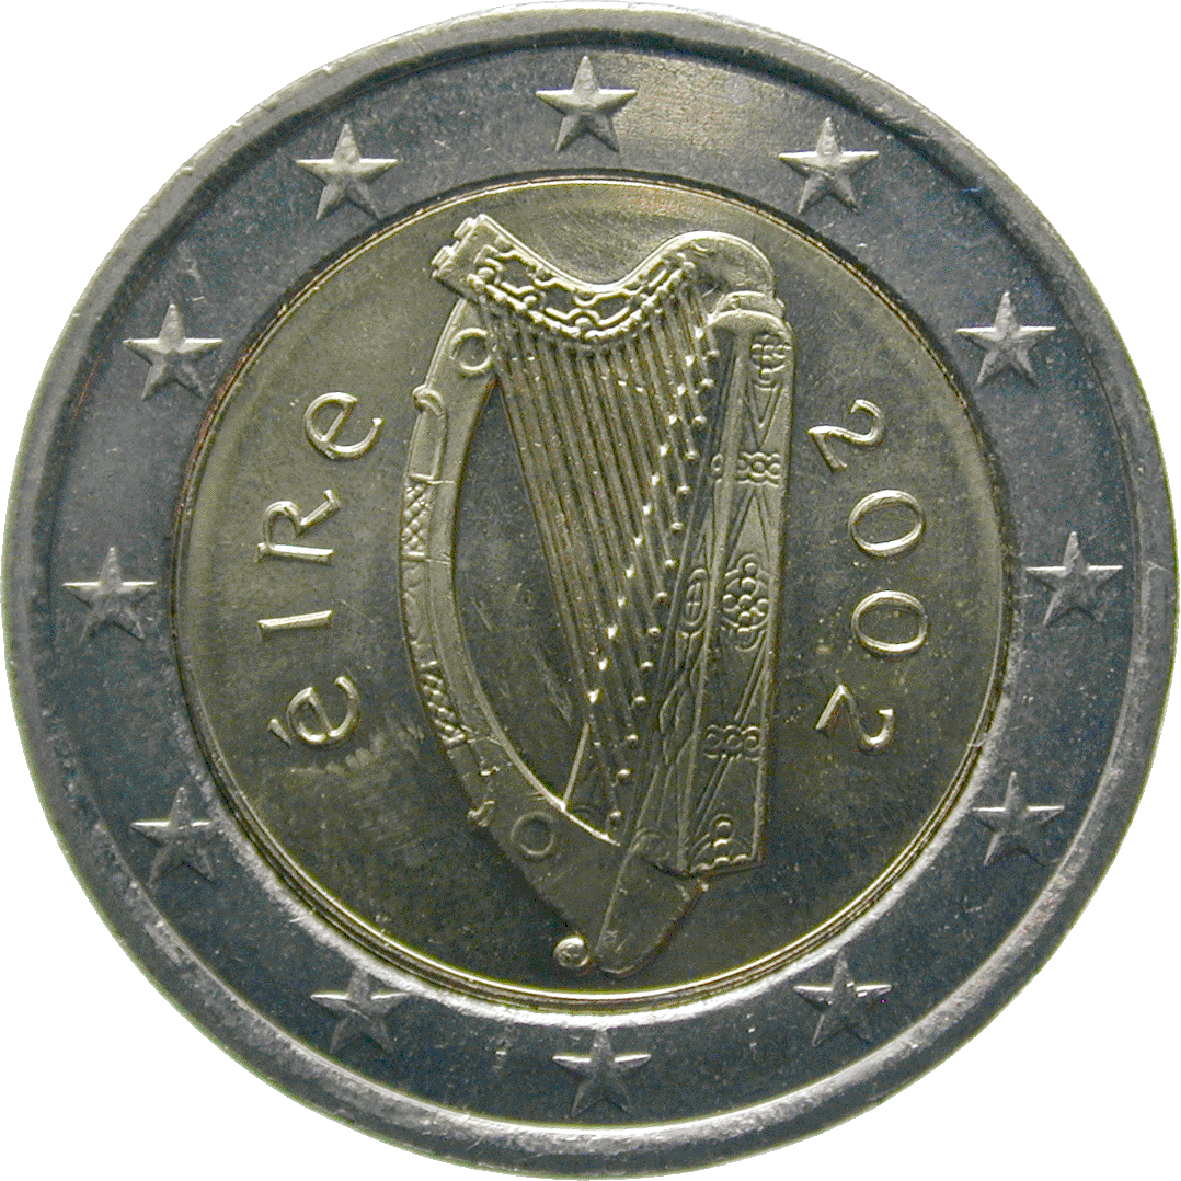 Republic of Ireland, 2 Euros 2002 (reverse)